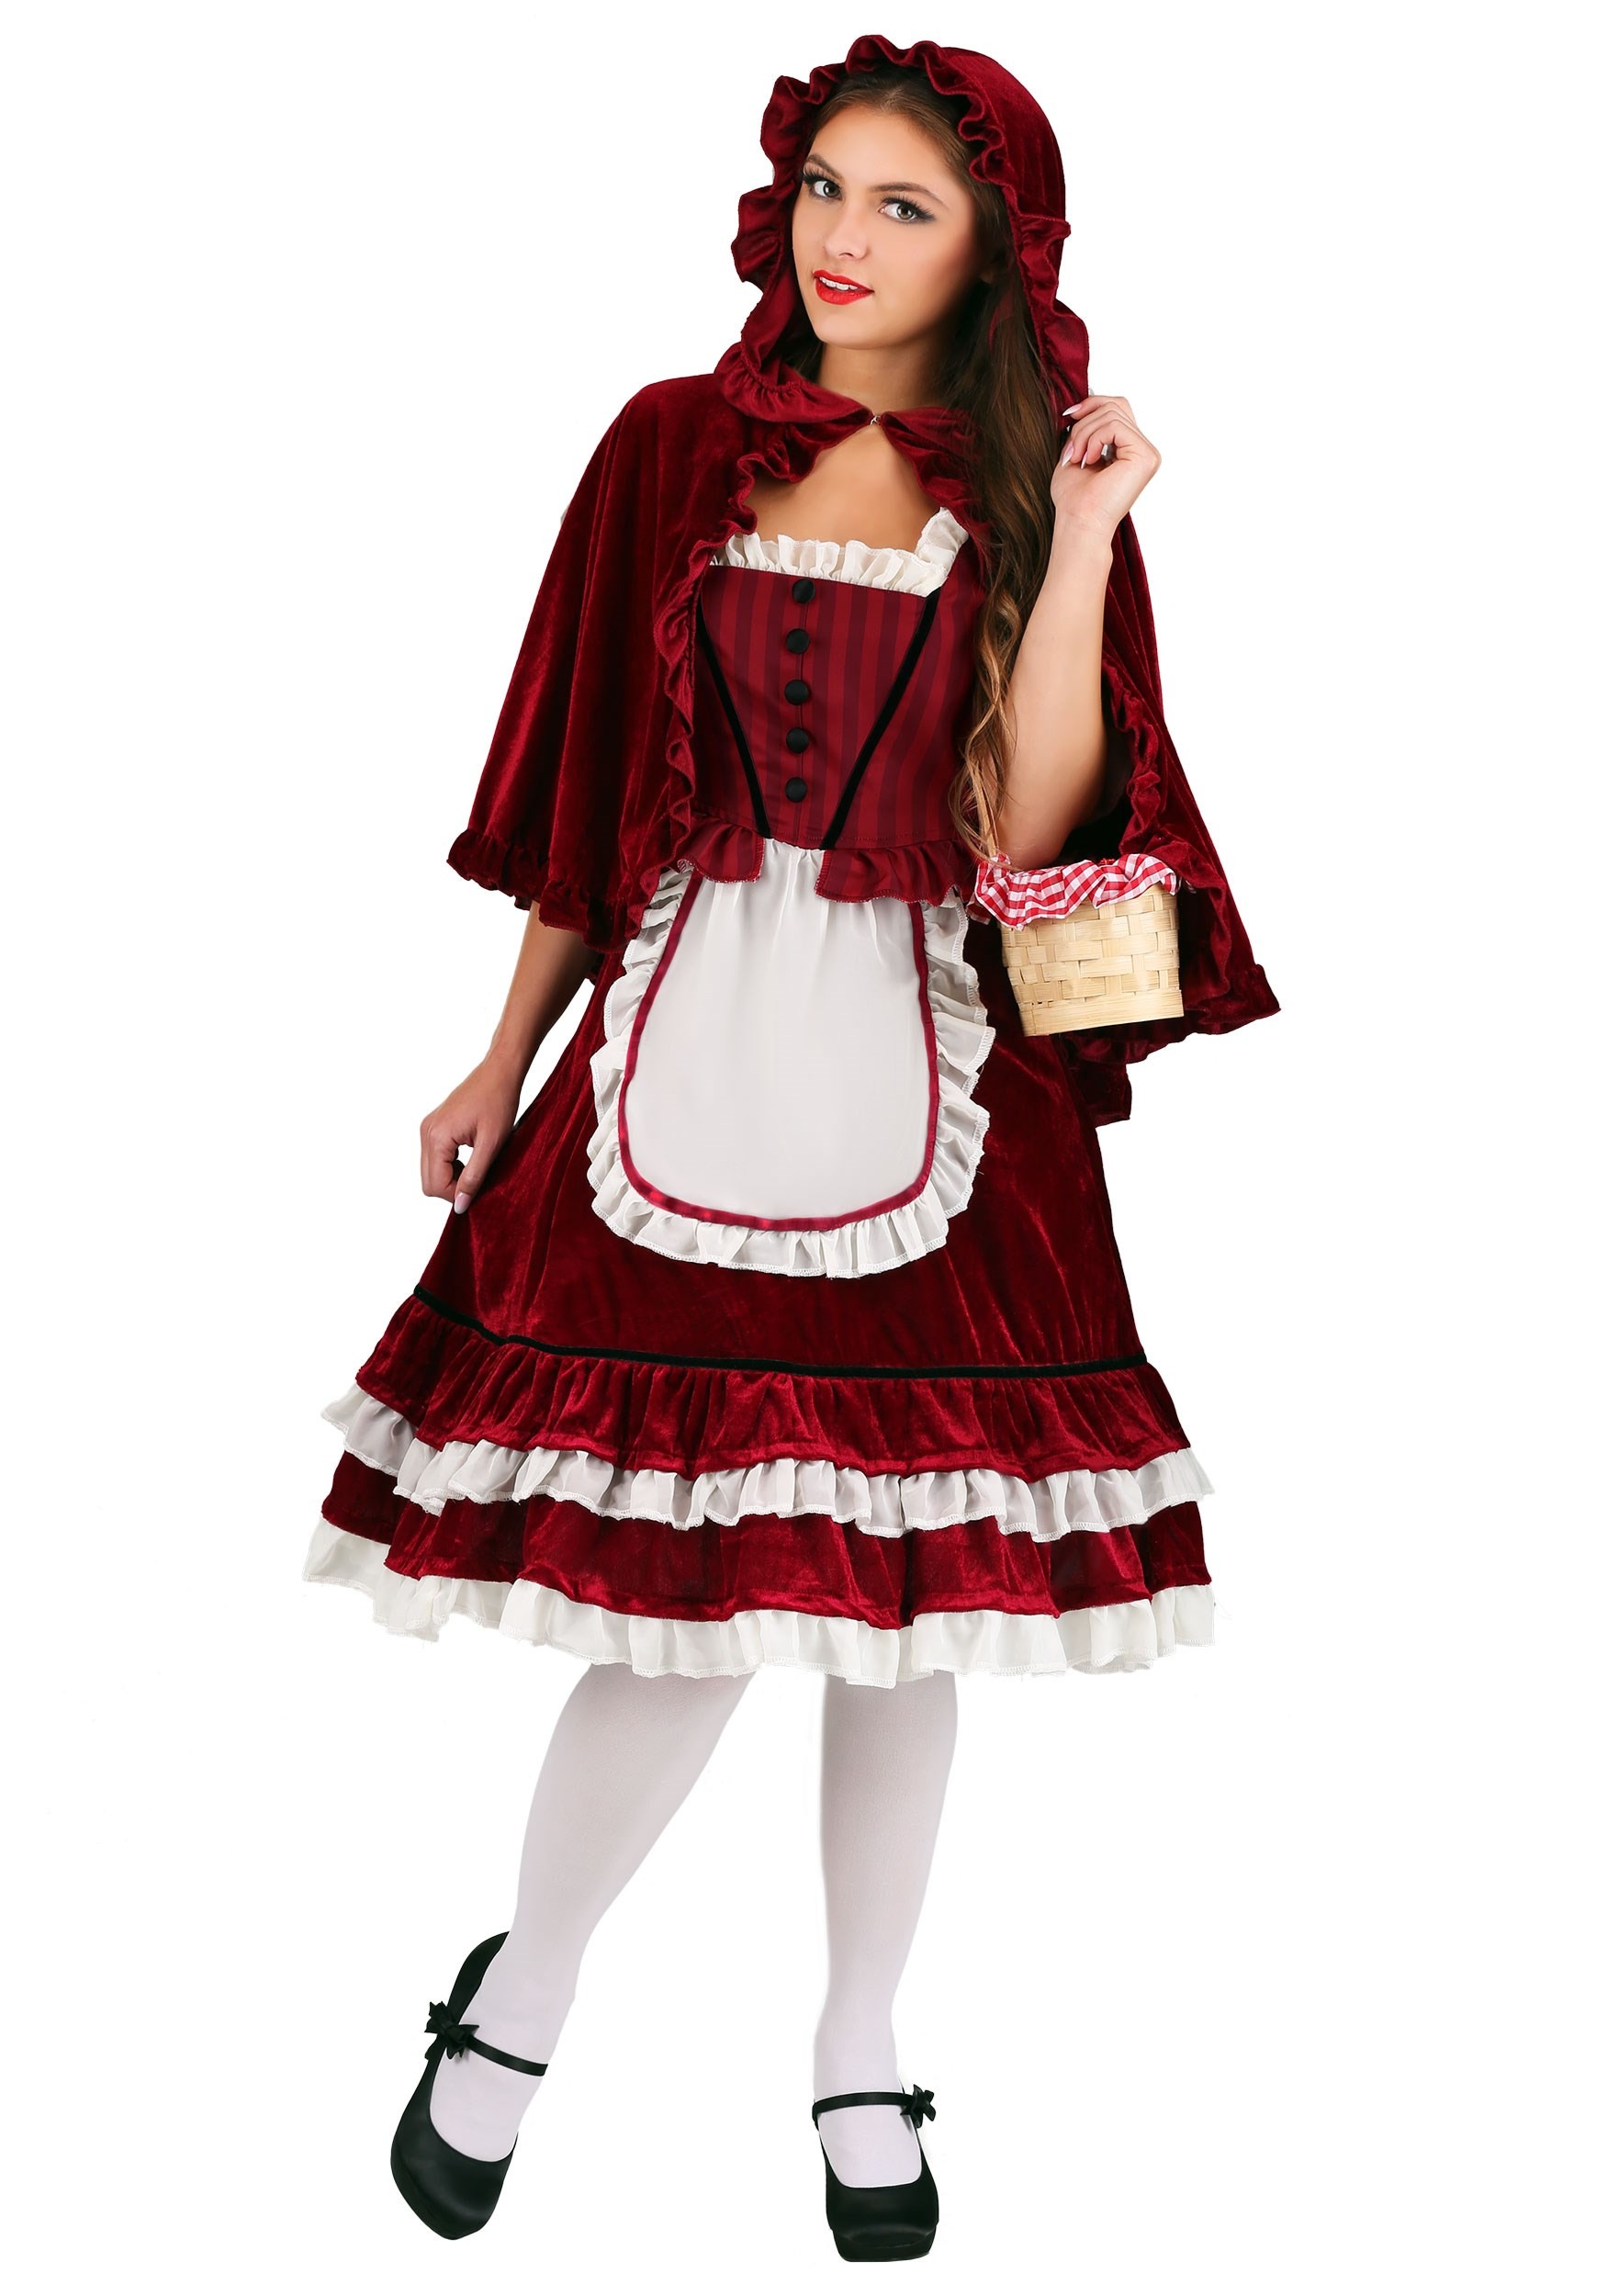 Andernfalls Transzendieren Hostess Red Riding Hood Kostüm Gittergewebe Kleid Knöchel